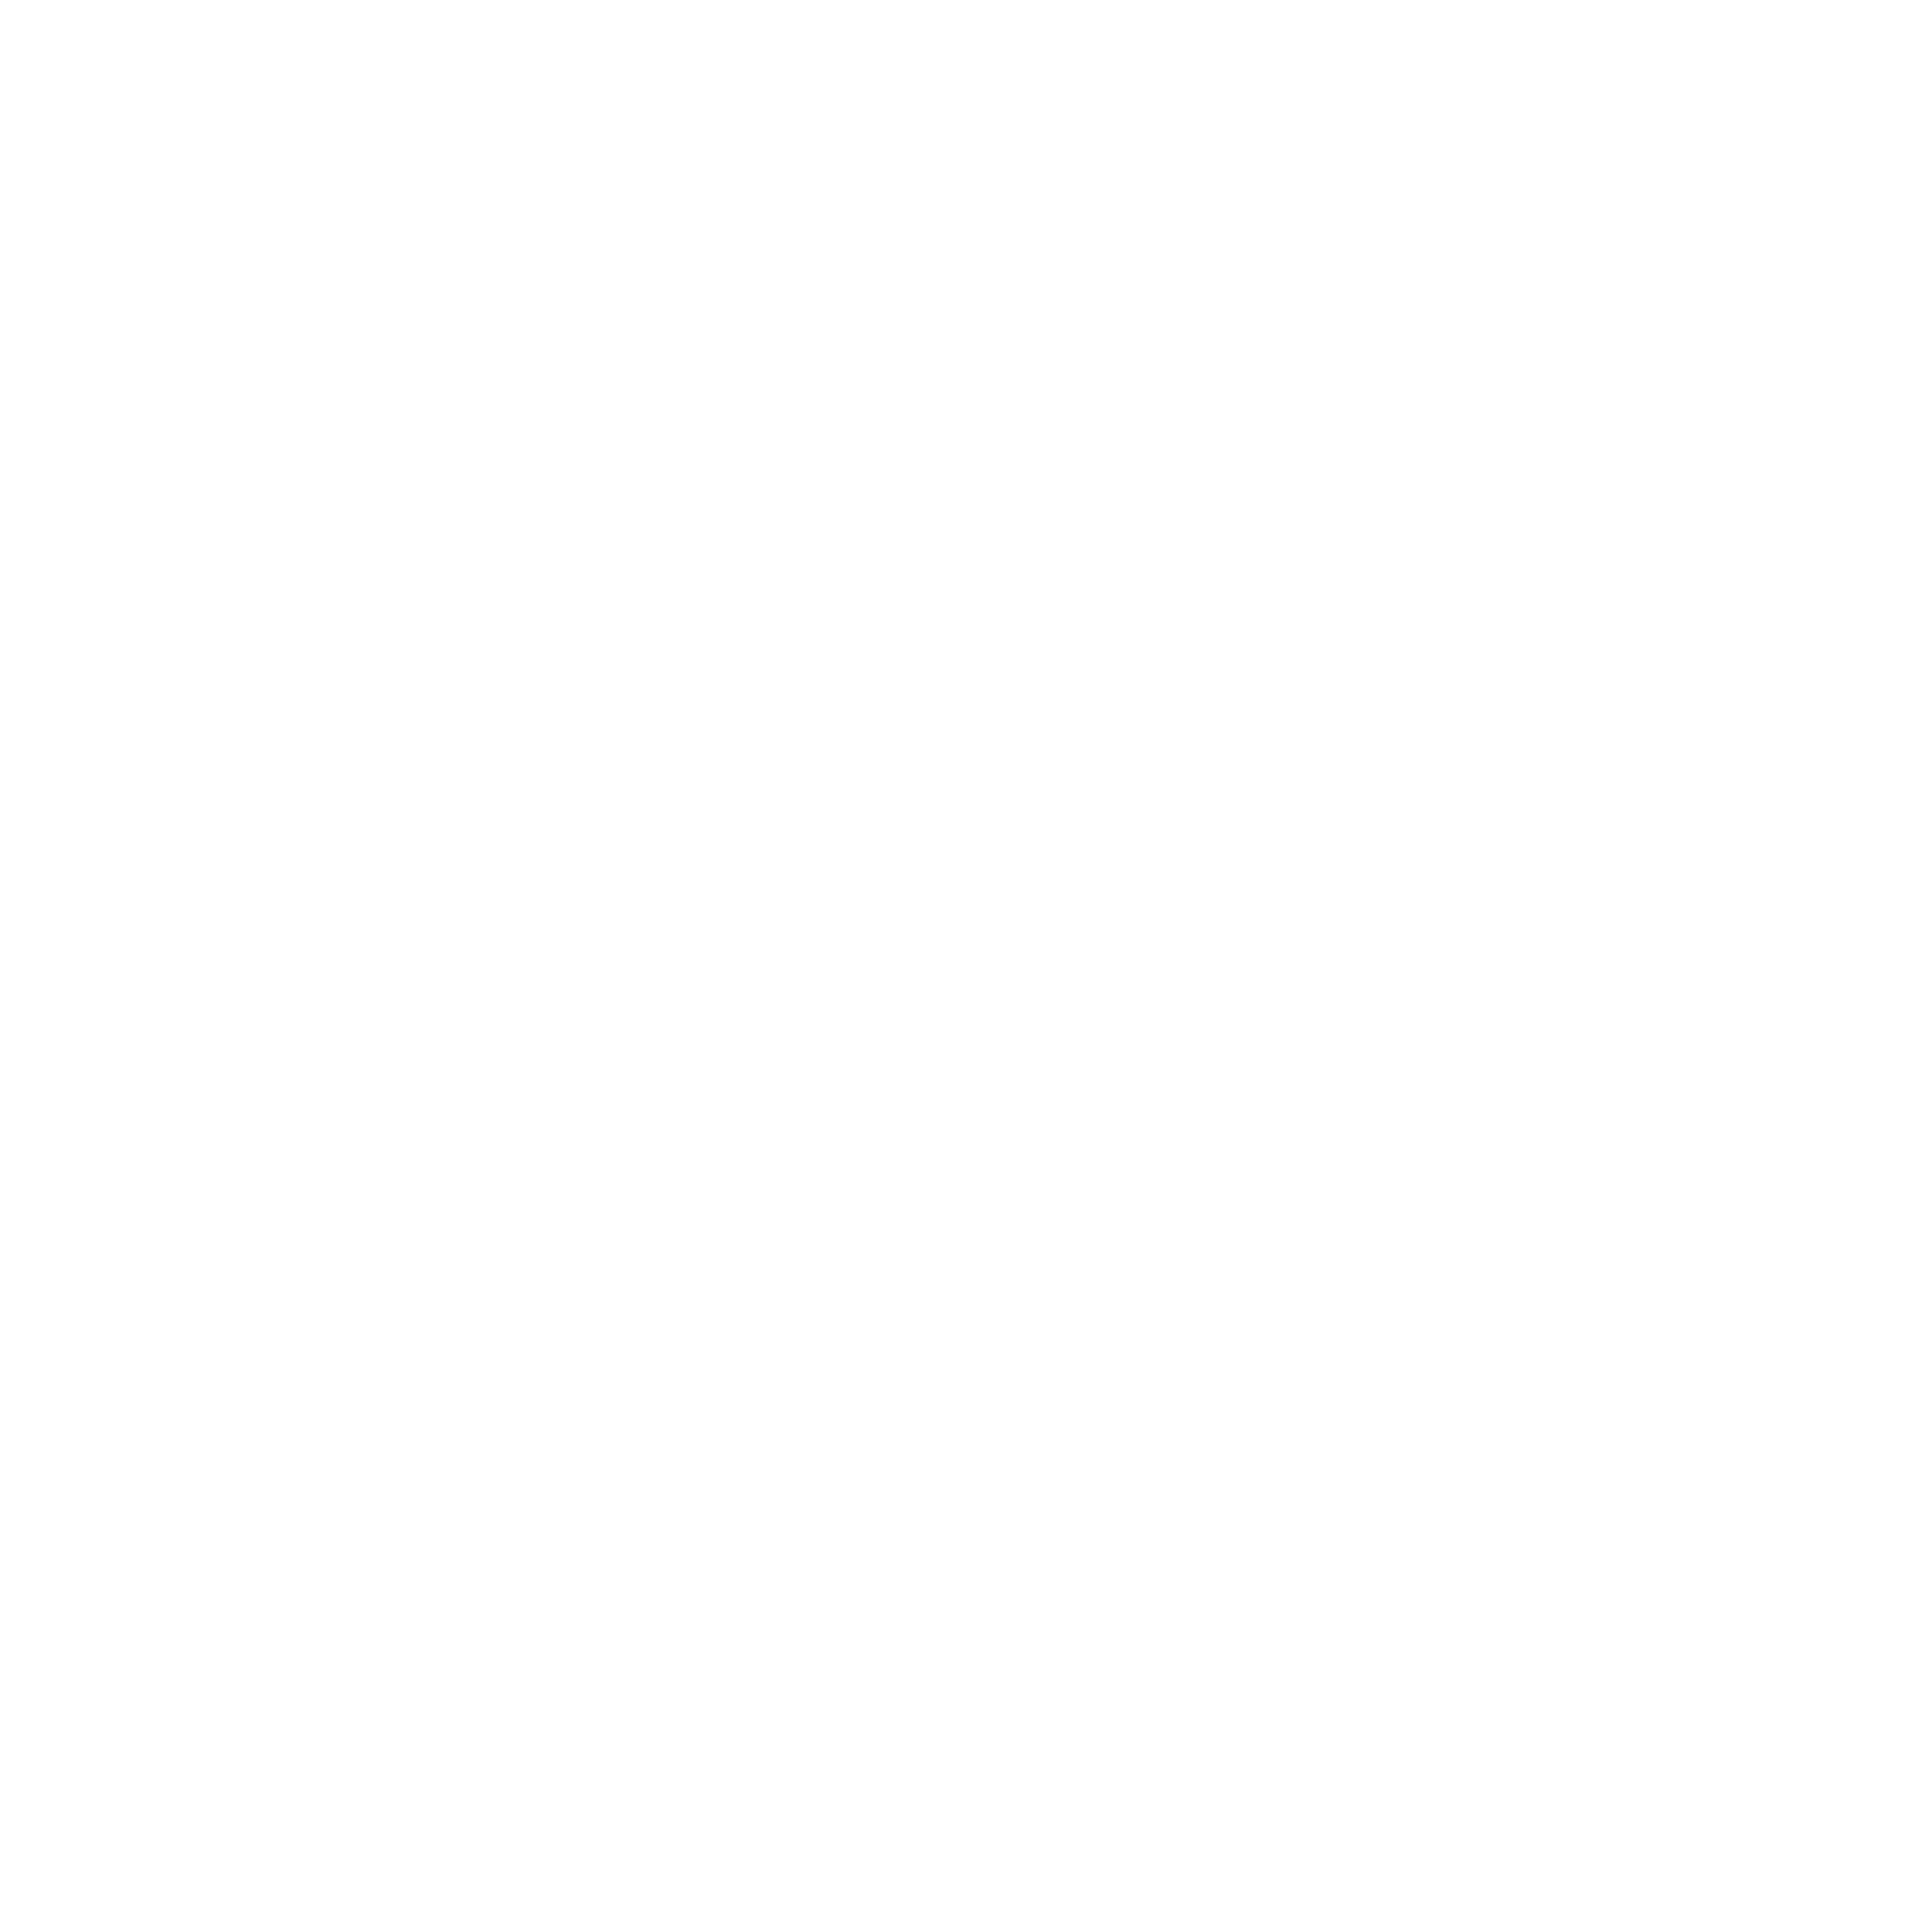 Jenny Craig Logo - Jenny Craig Logo PNG Transparent & SVG Vector - Freebie Supply